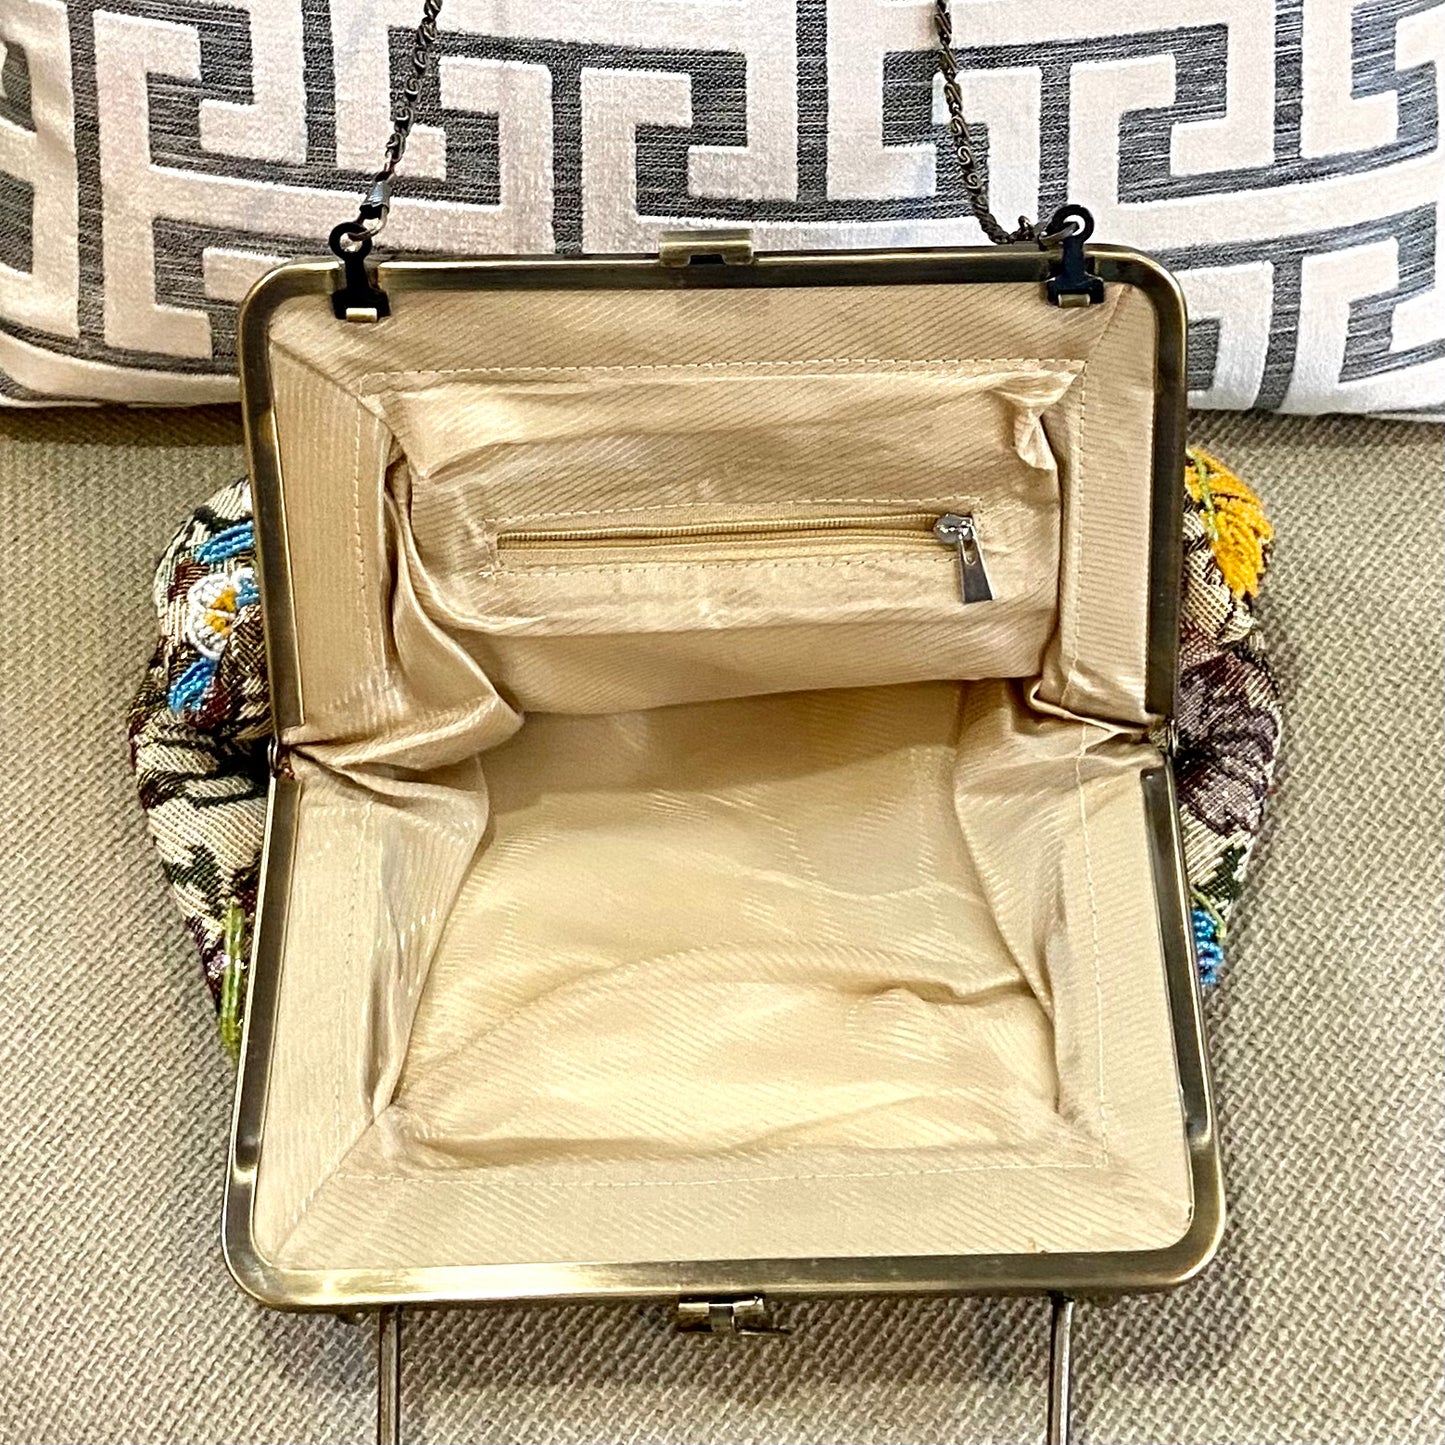 Fabulous vintage beaded handbag sachel plus crossbody Statement bag.